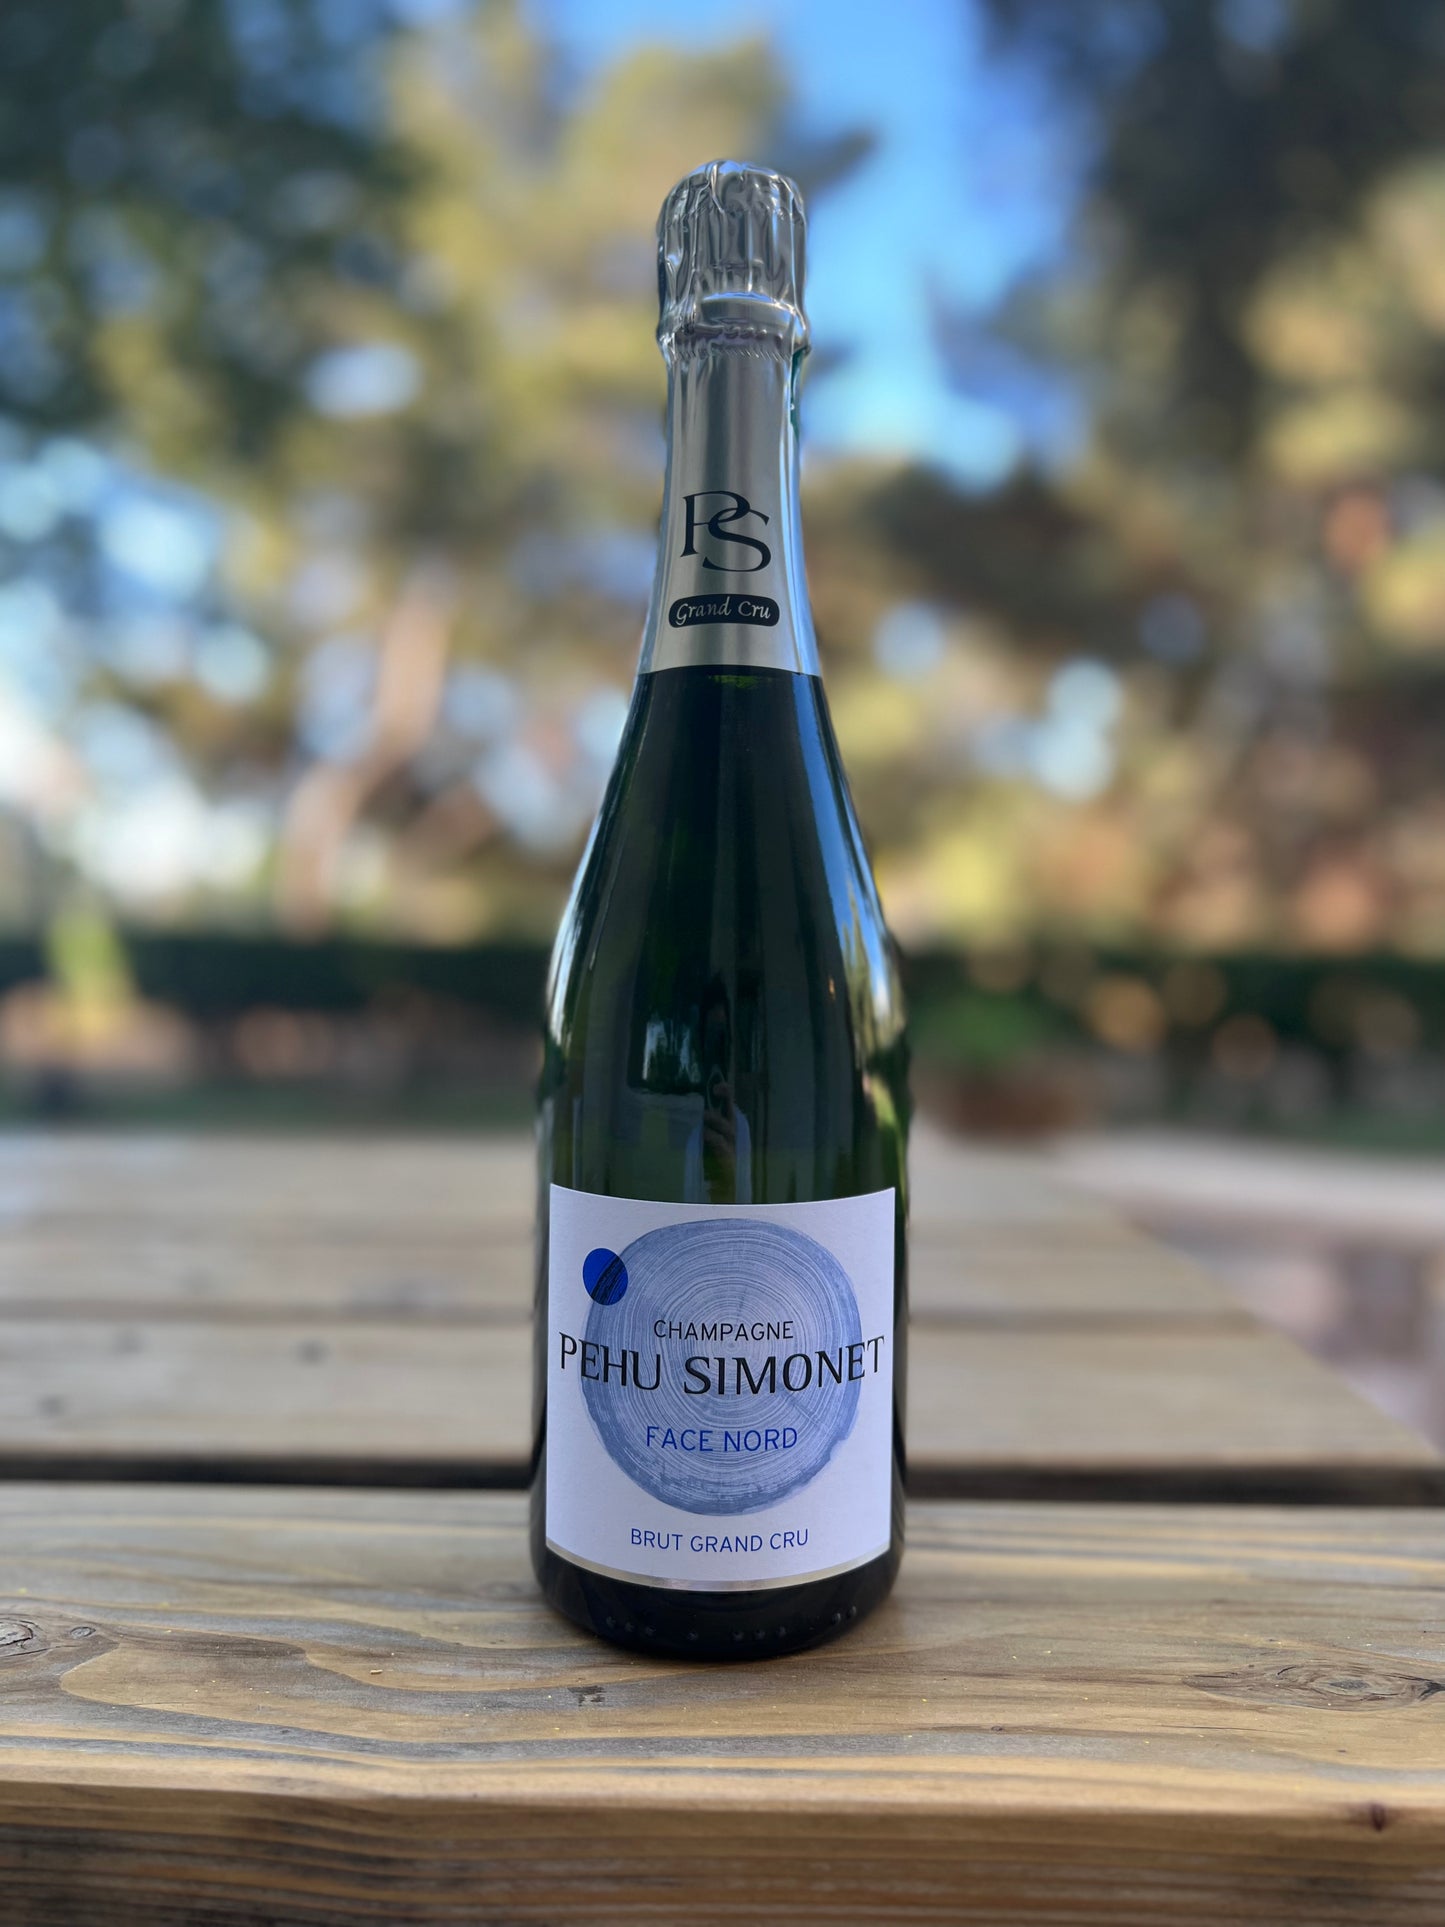 Champagne Pehu-Simonet 'Face Nord' Brut Grand Cru Champagne, France NV